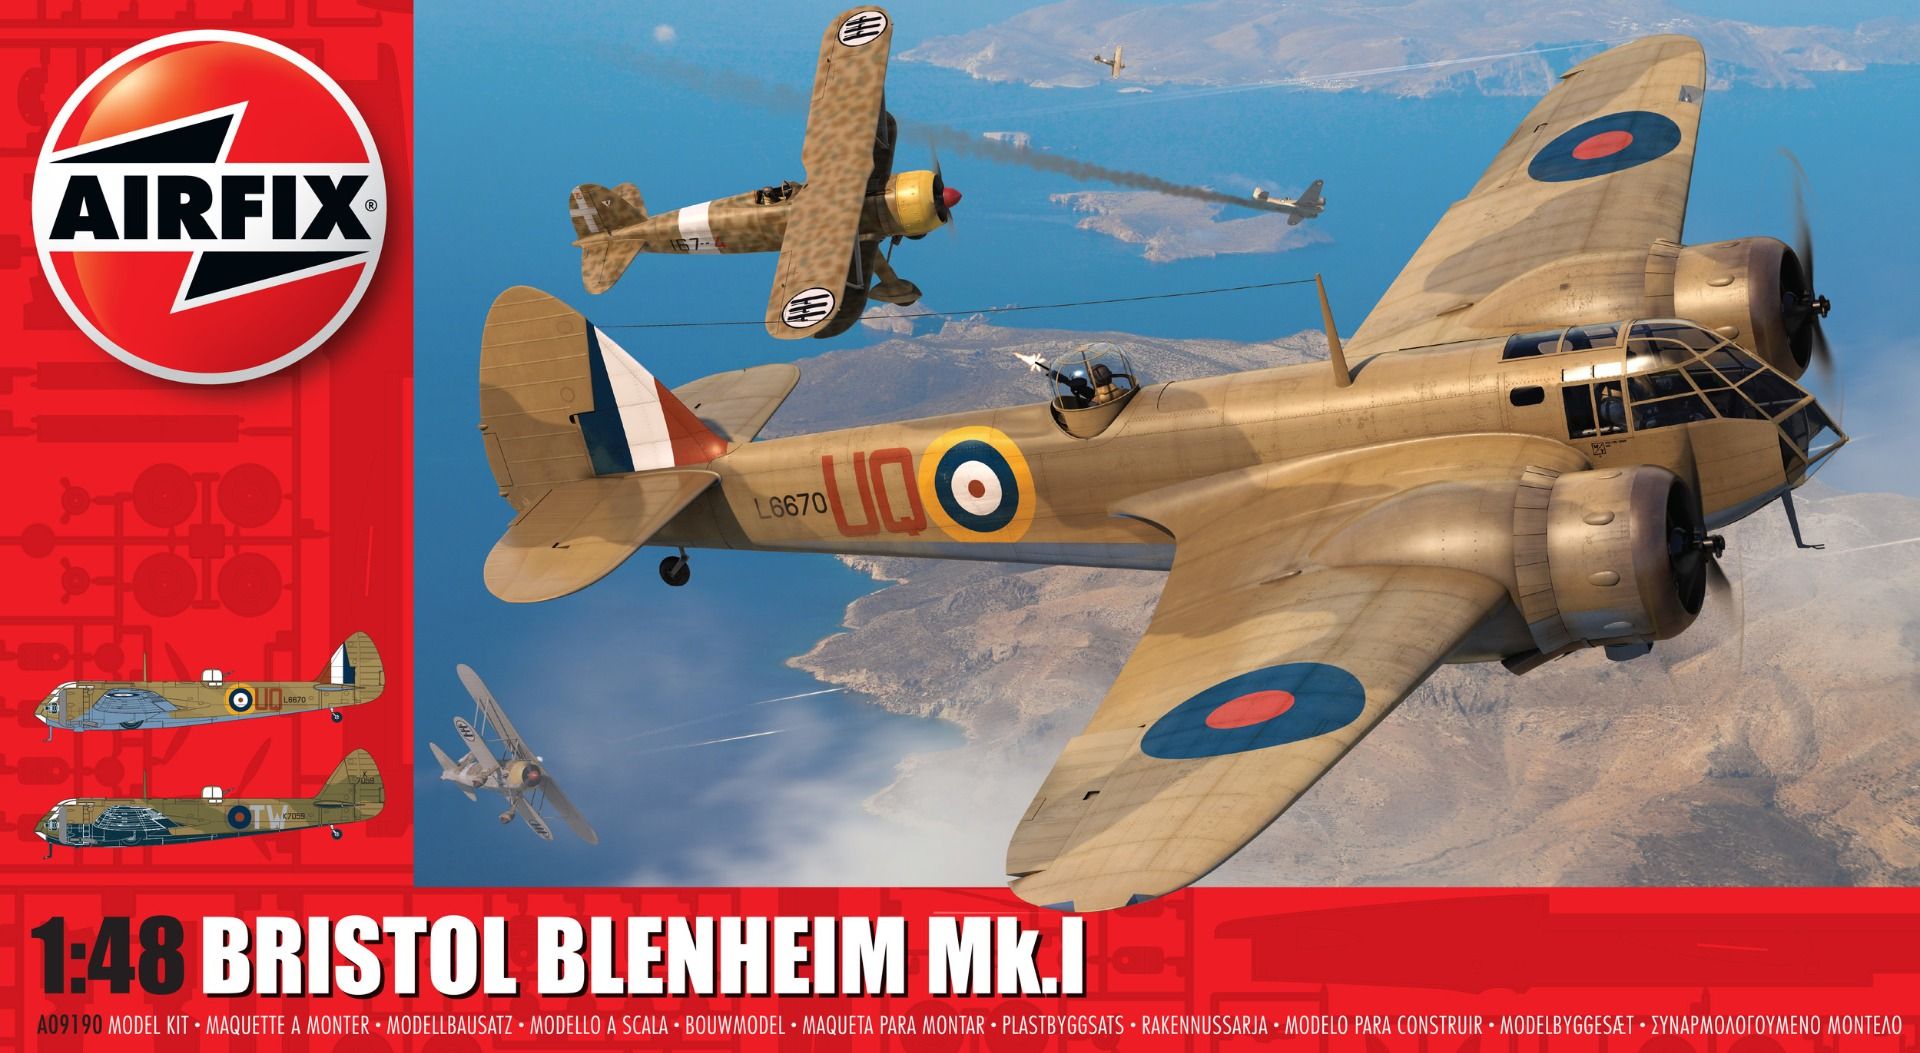 Airfix 1/48 Scale Bristol Blenheim Mk.1 Model Kit